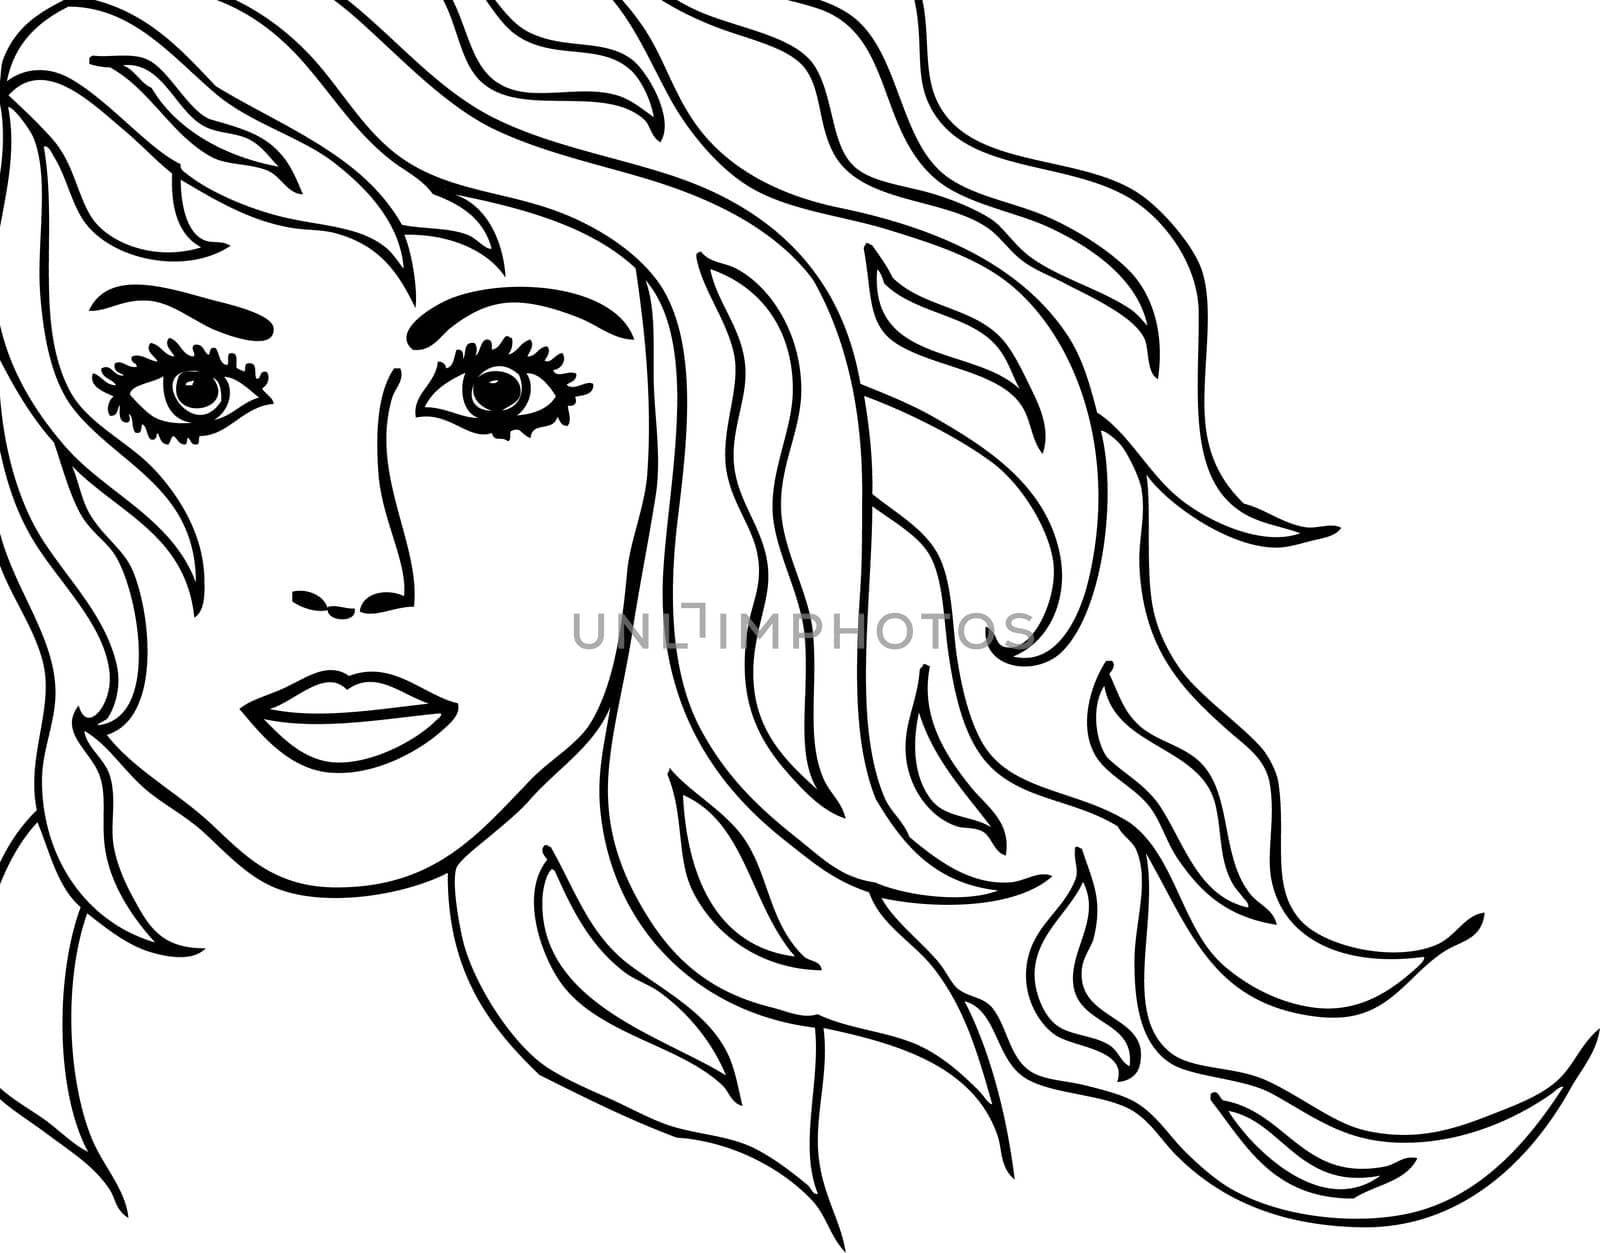 Woman Head Illustration by peromarketing